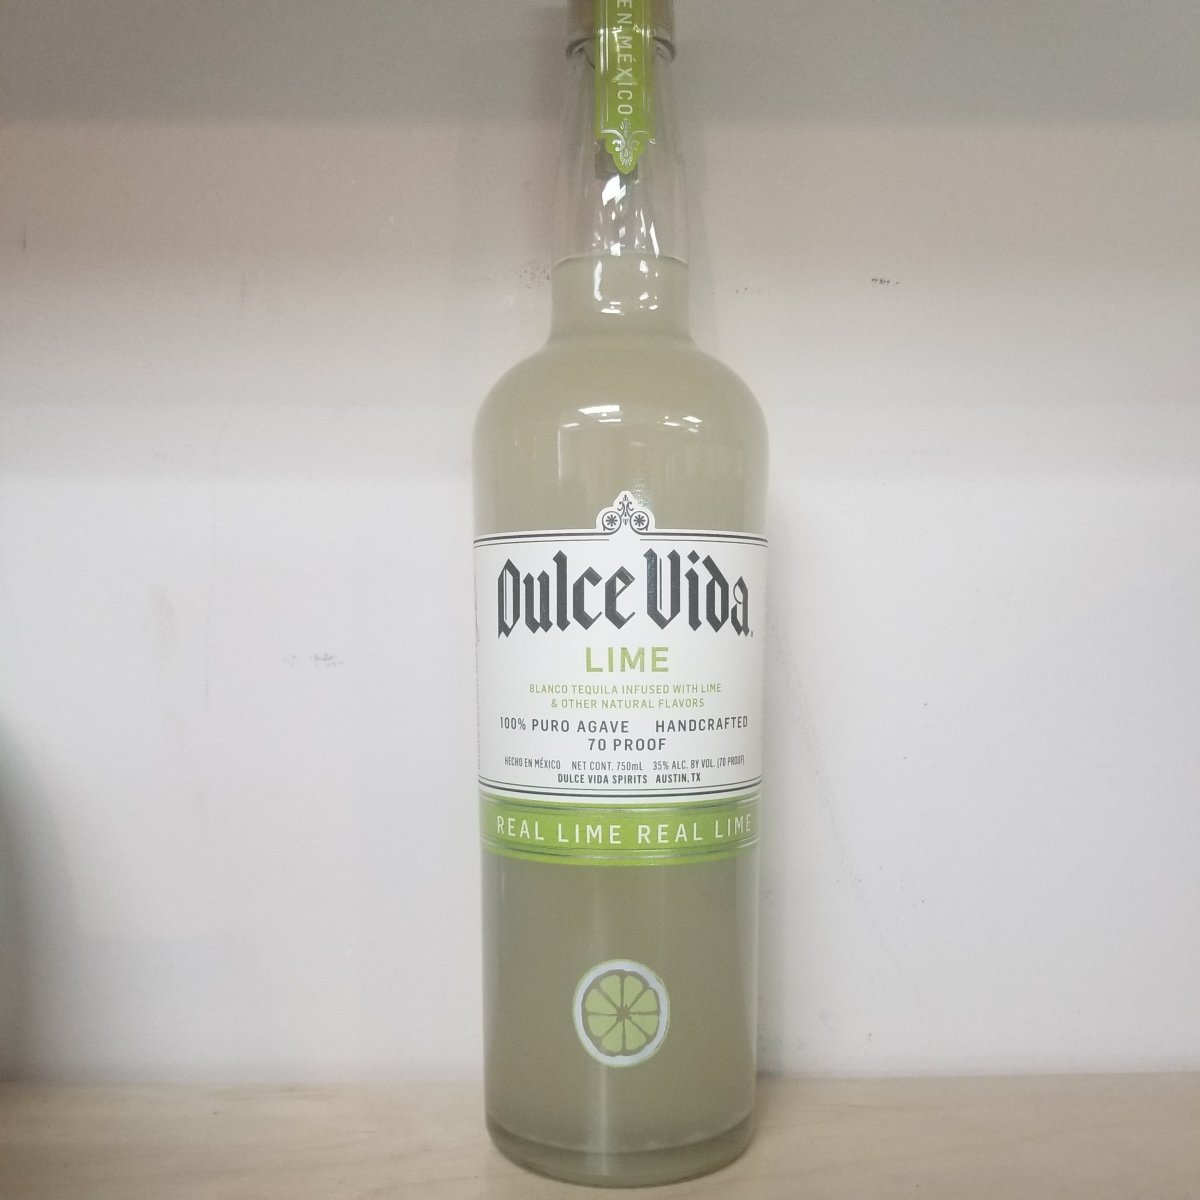 Dulce Vida Lime Tequila 50ml (Organic) (Better than Skinny Girl) - Sip & Say